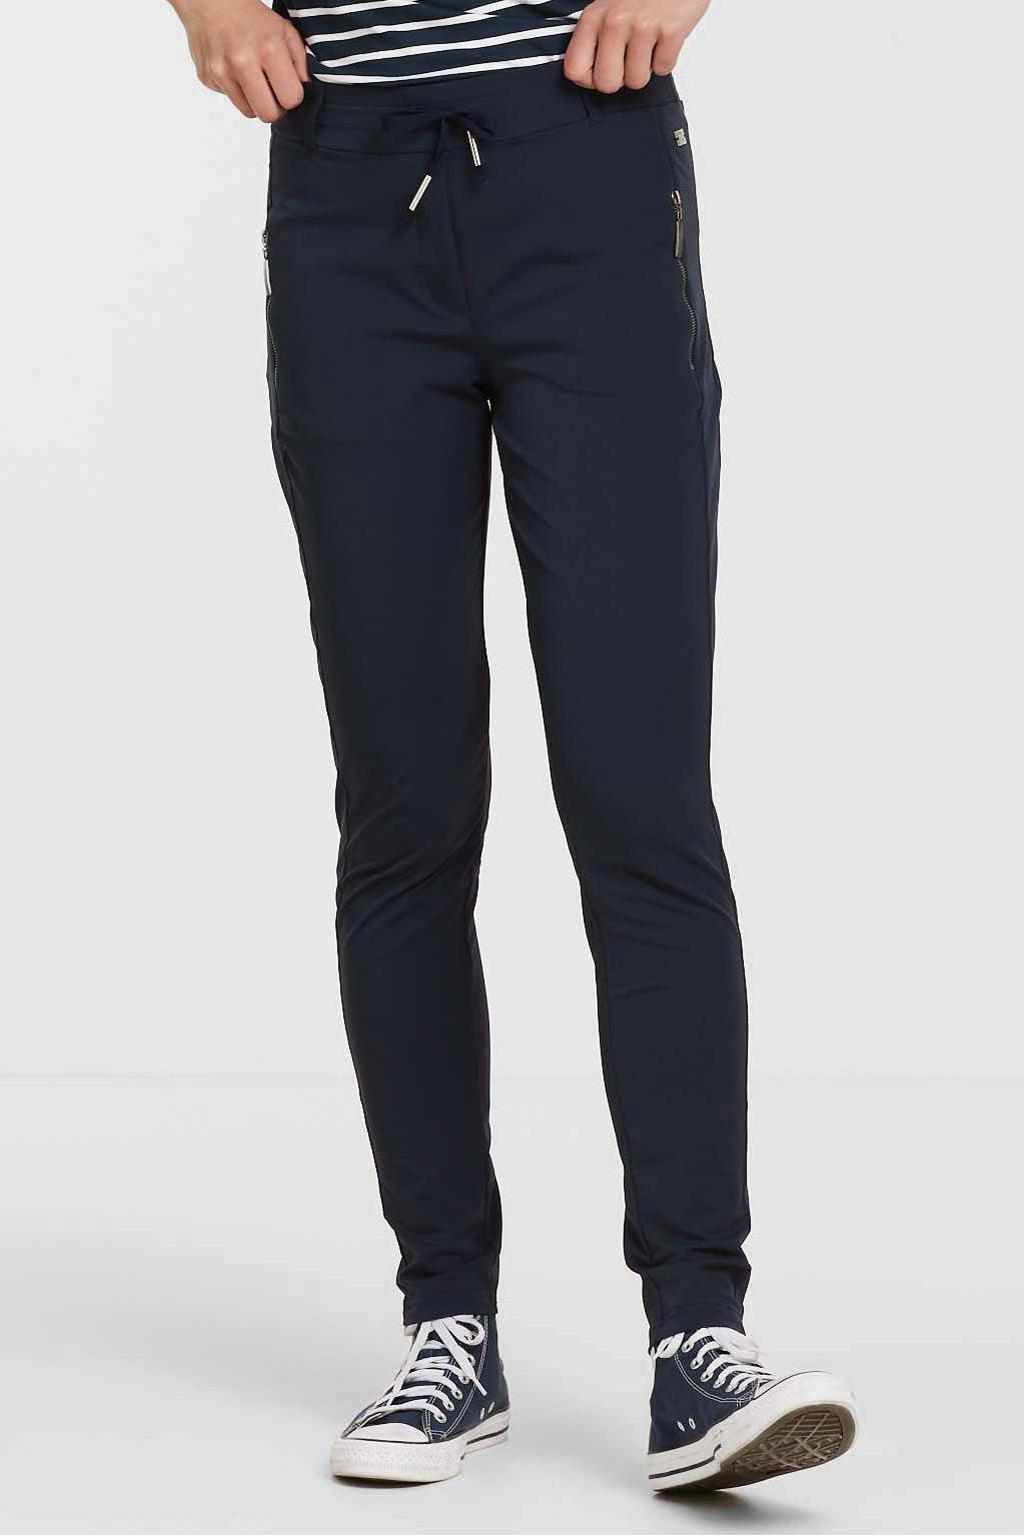 TQ-Amsterdam high waist tapered fit pantalon Maud van travelstof donkerblauw